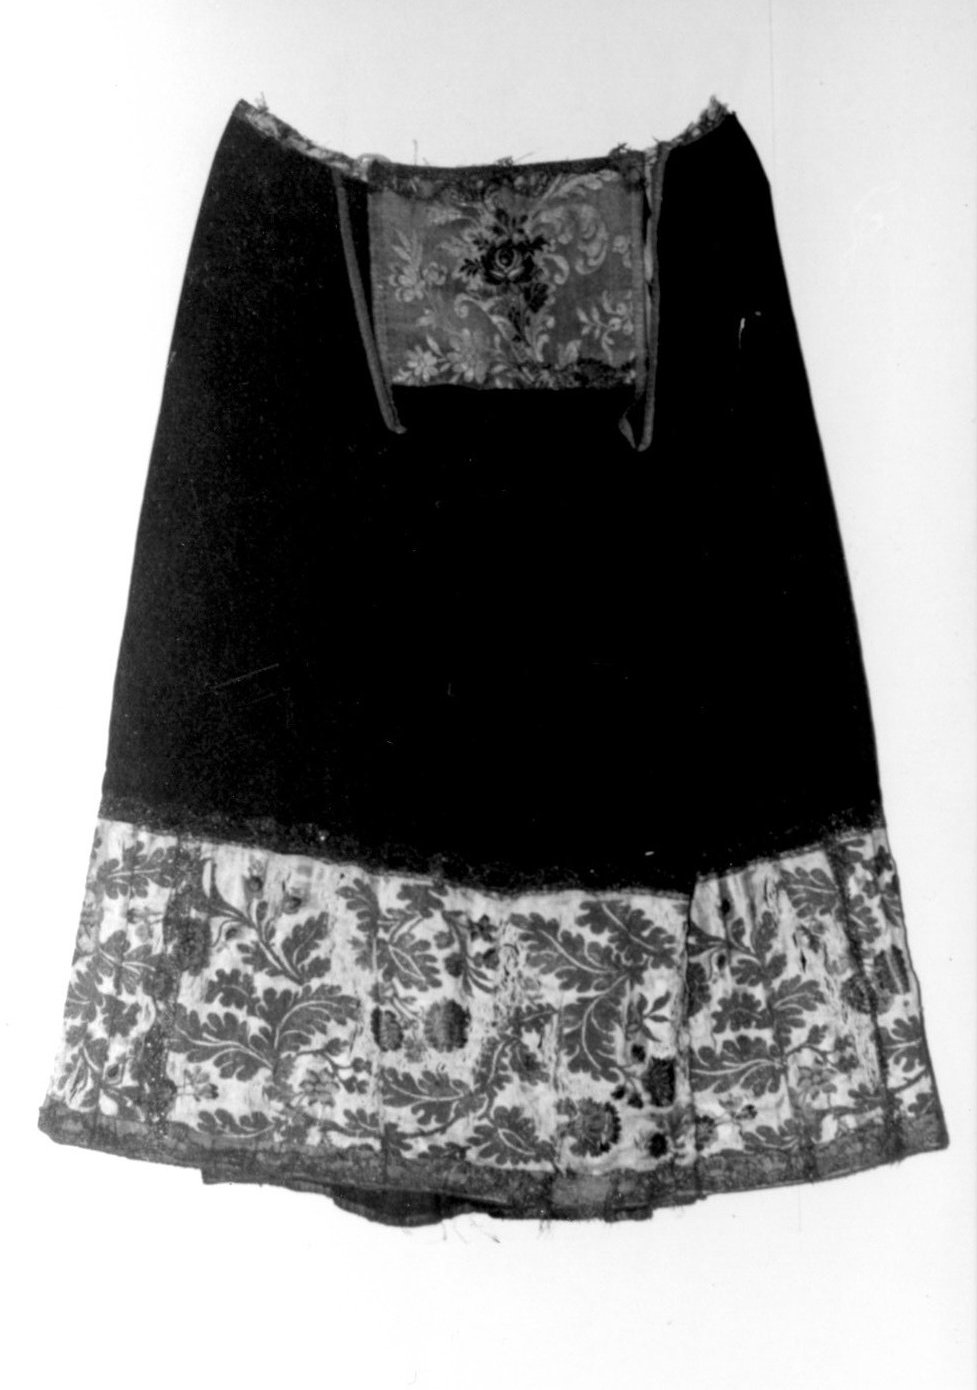 gonna, costume femminile - manifattura sarda (sec. XIX)